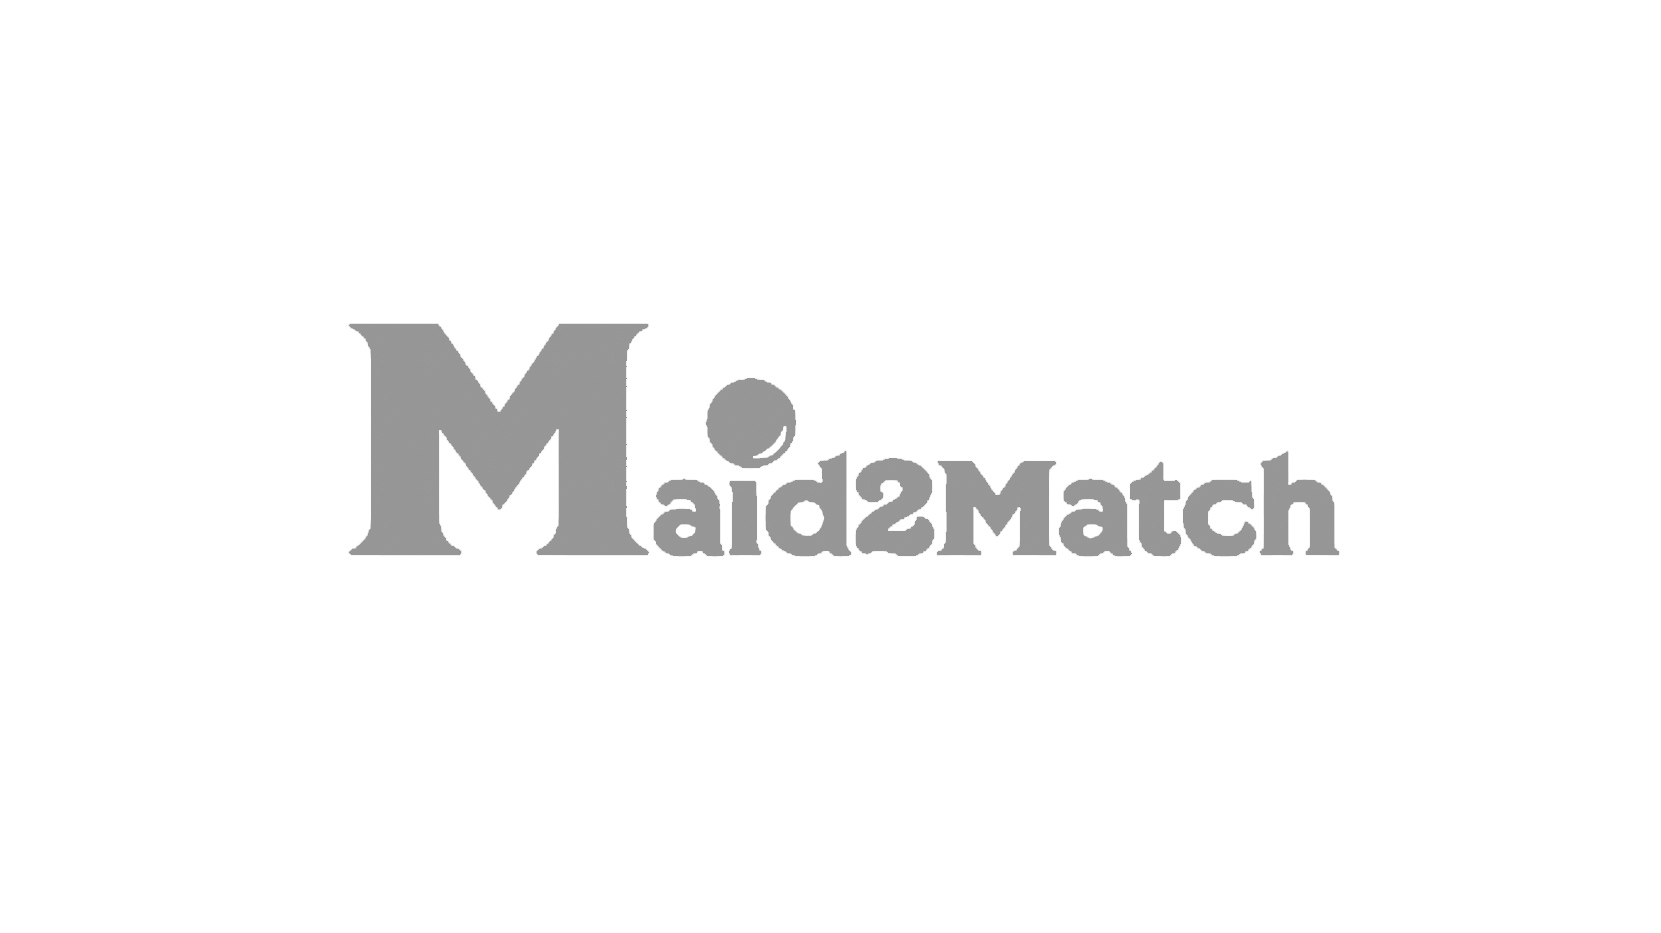 maid2match